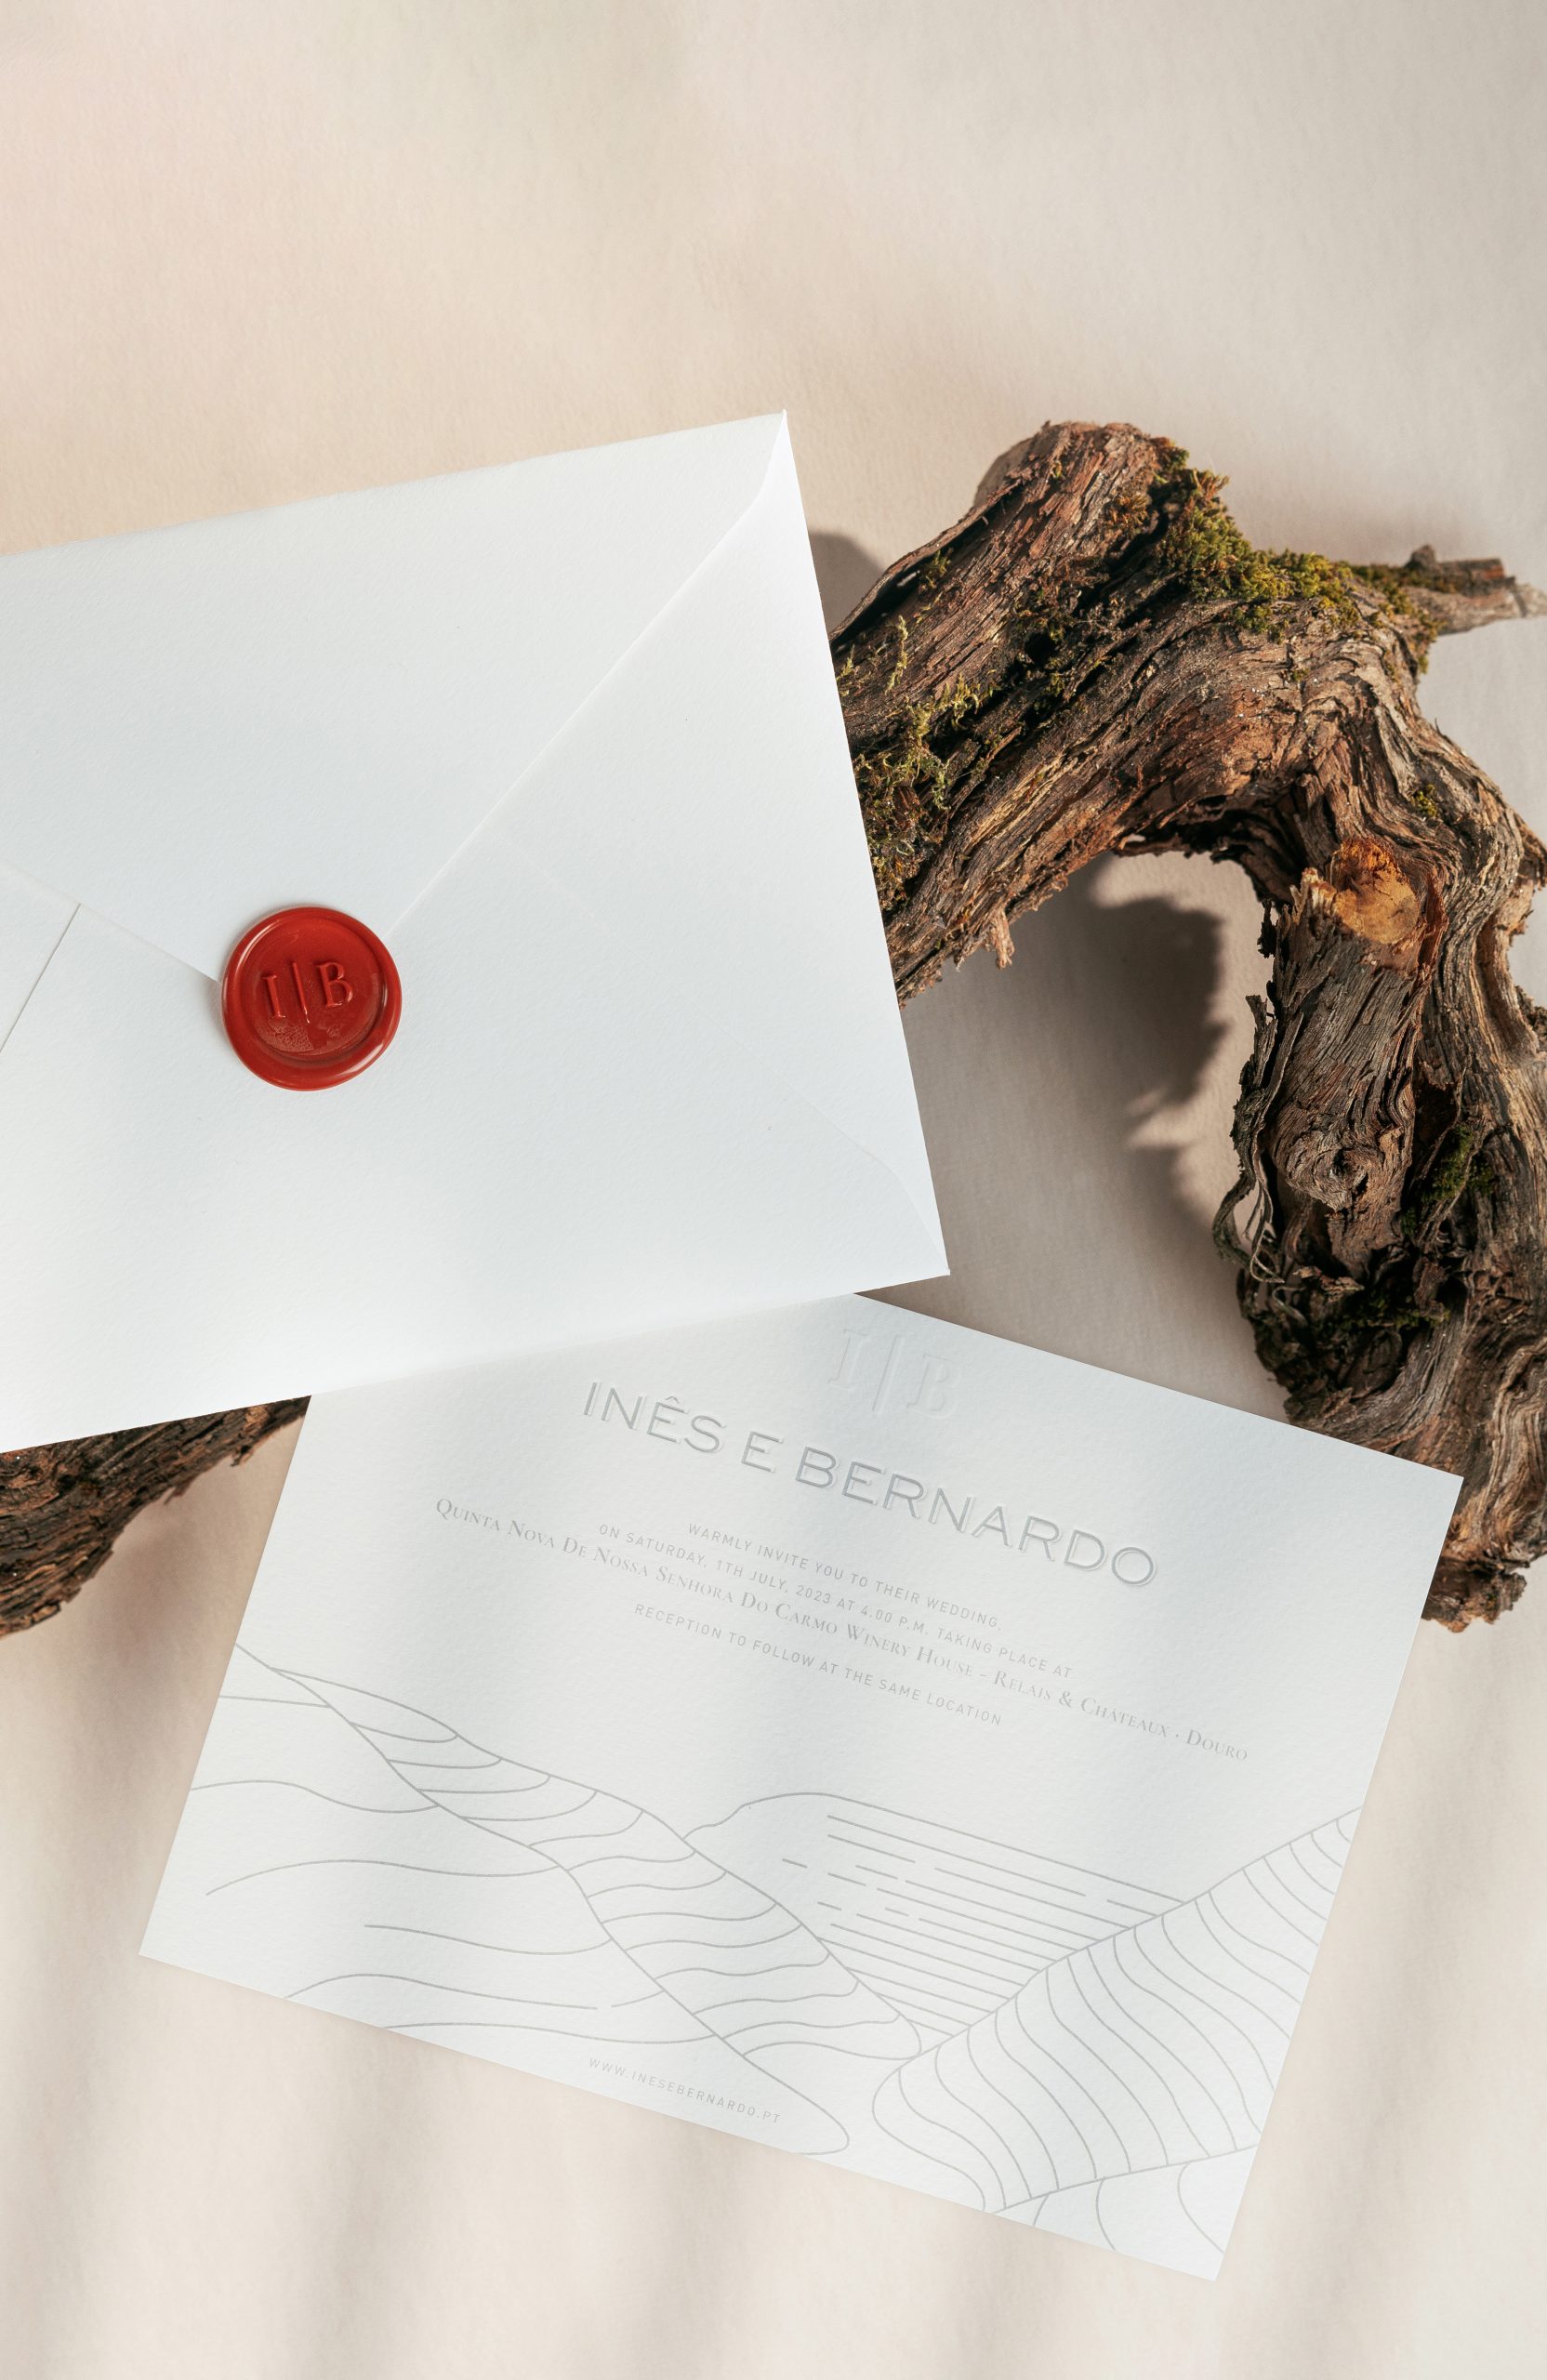 <a style="color:white;" href="https://dev.pergaminho.design/convites-de-casamento/convites-minimalistas/">Convites Minimalistas</a>